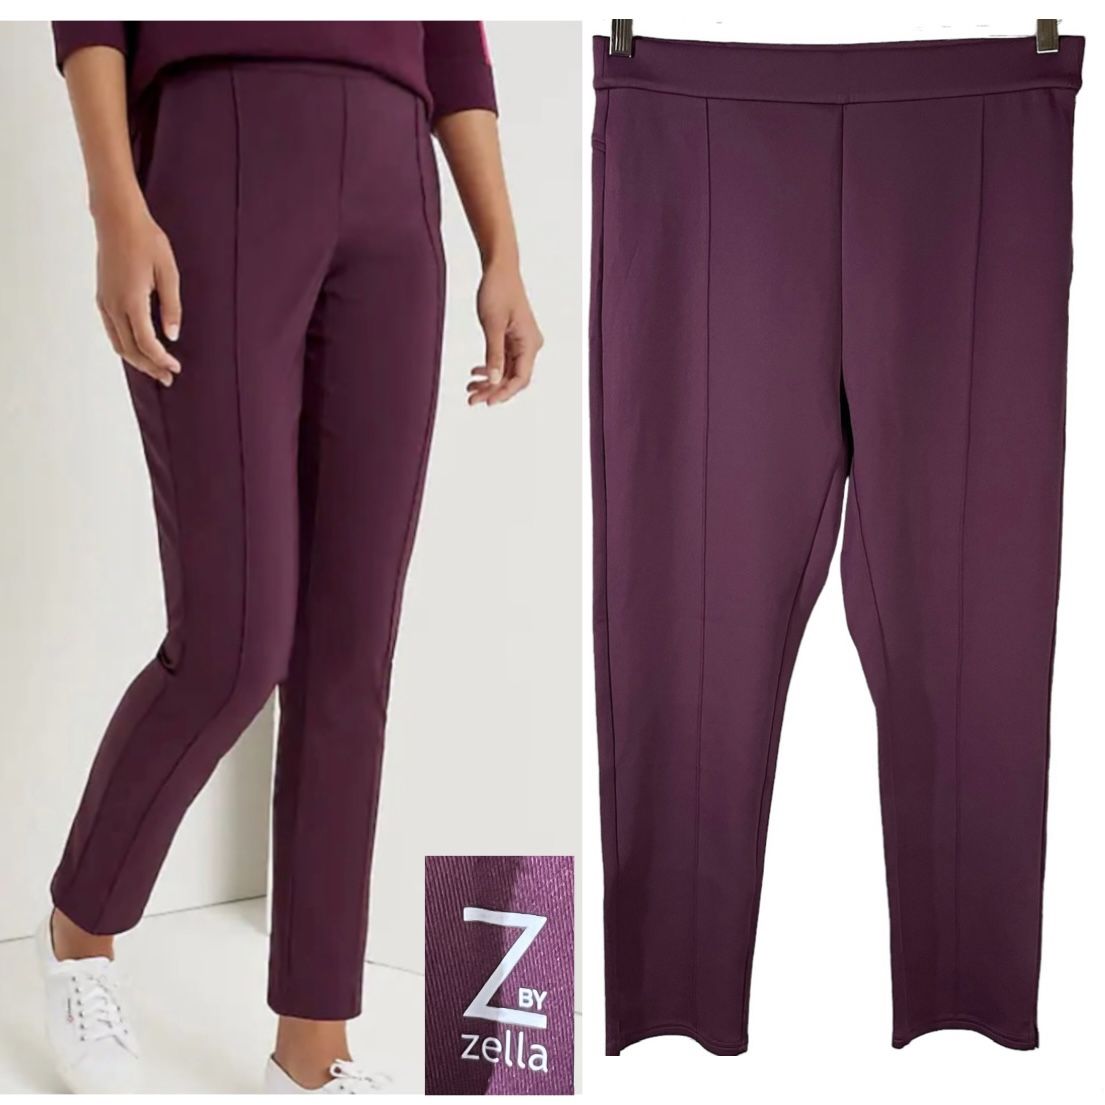 Z by Zella pull-on high waist activewear purple pants women’s Size Large